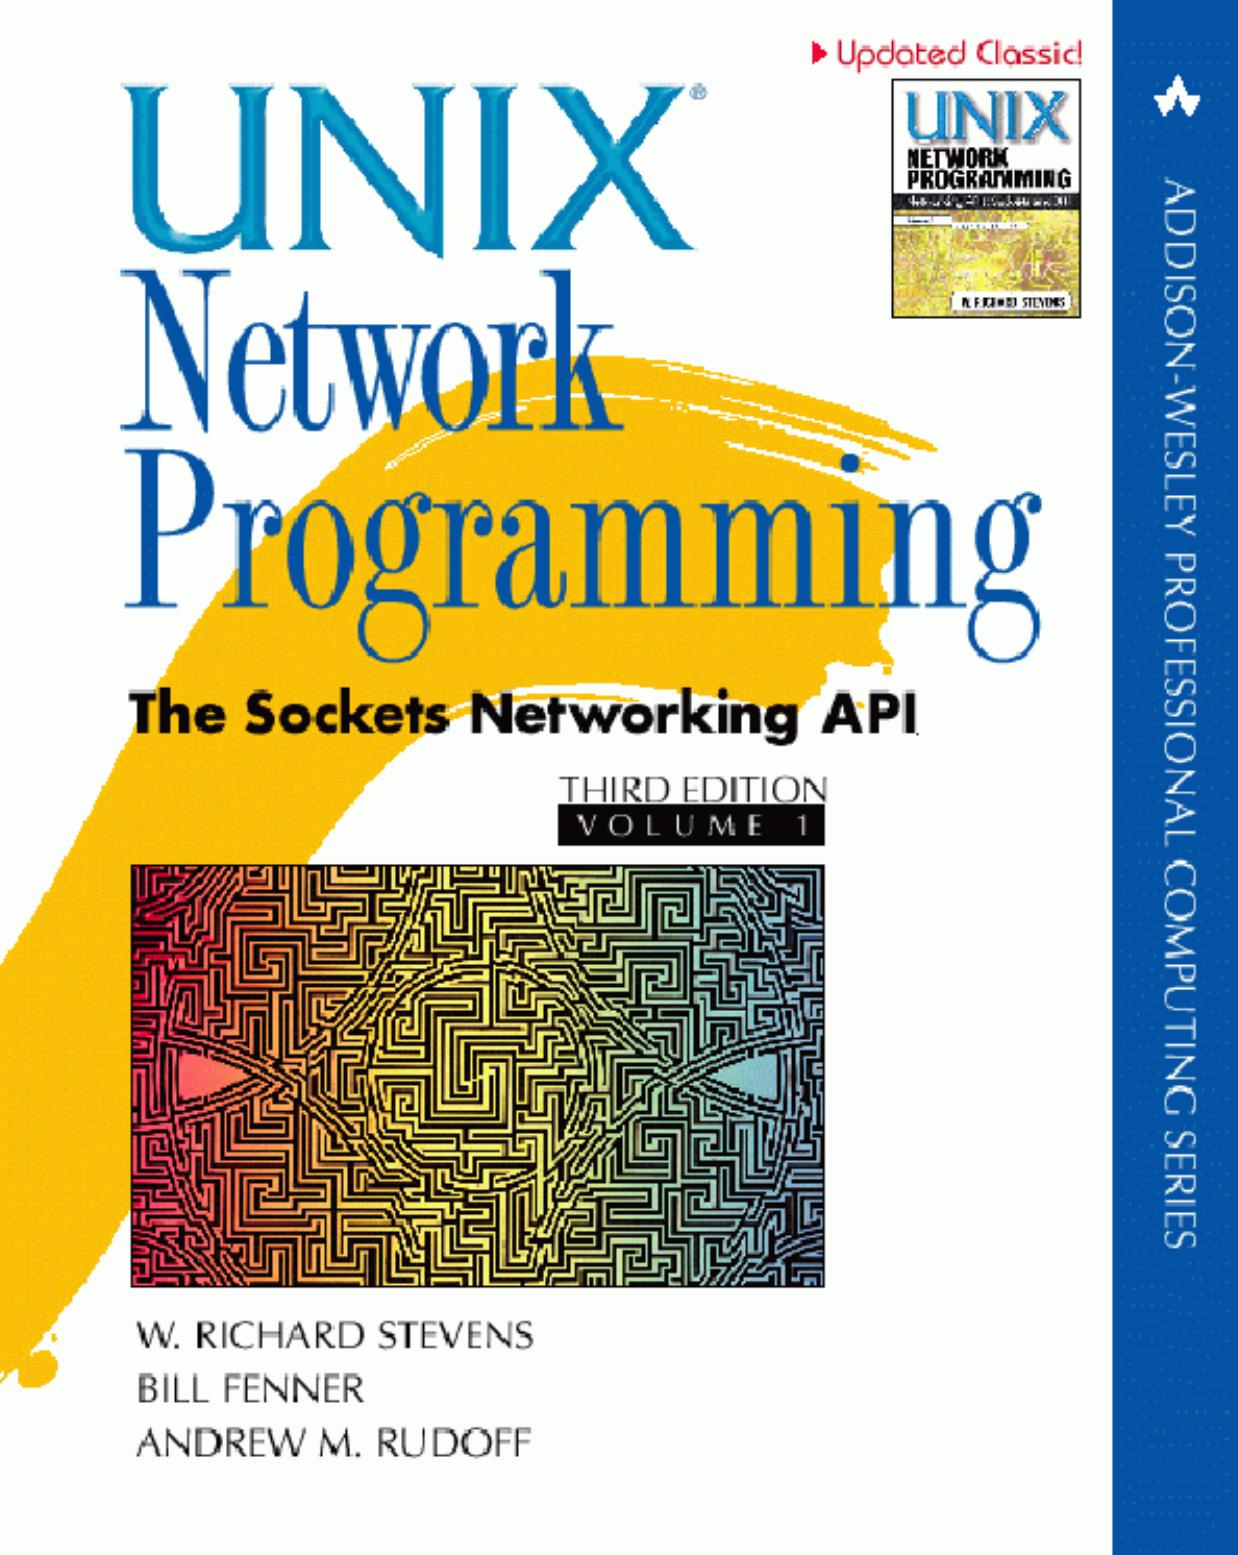 UNIX Network Programming: The Sockets Networking API